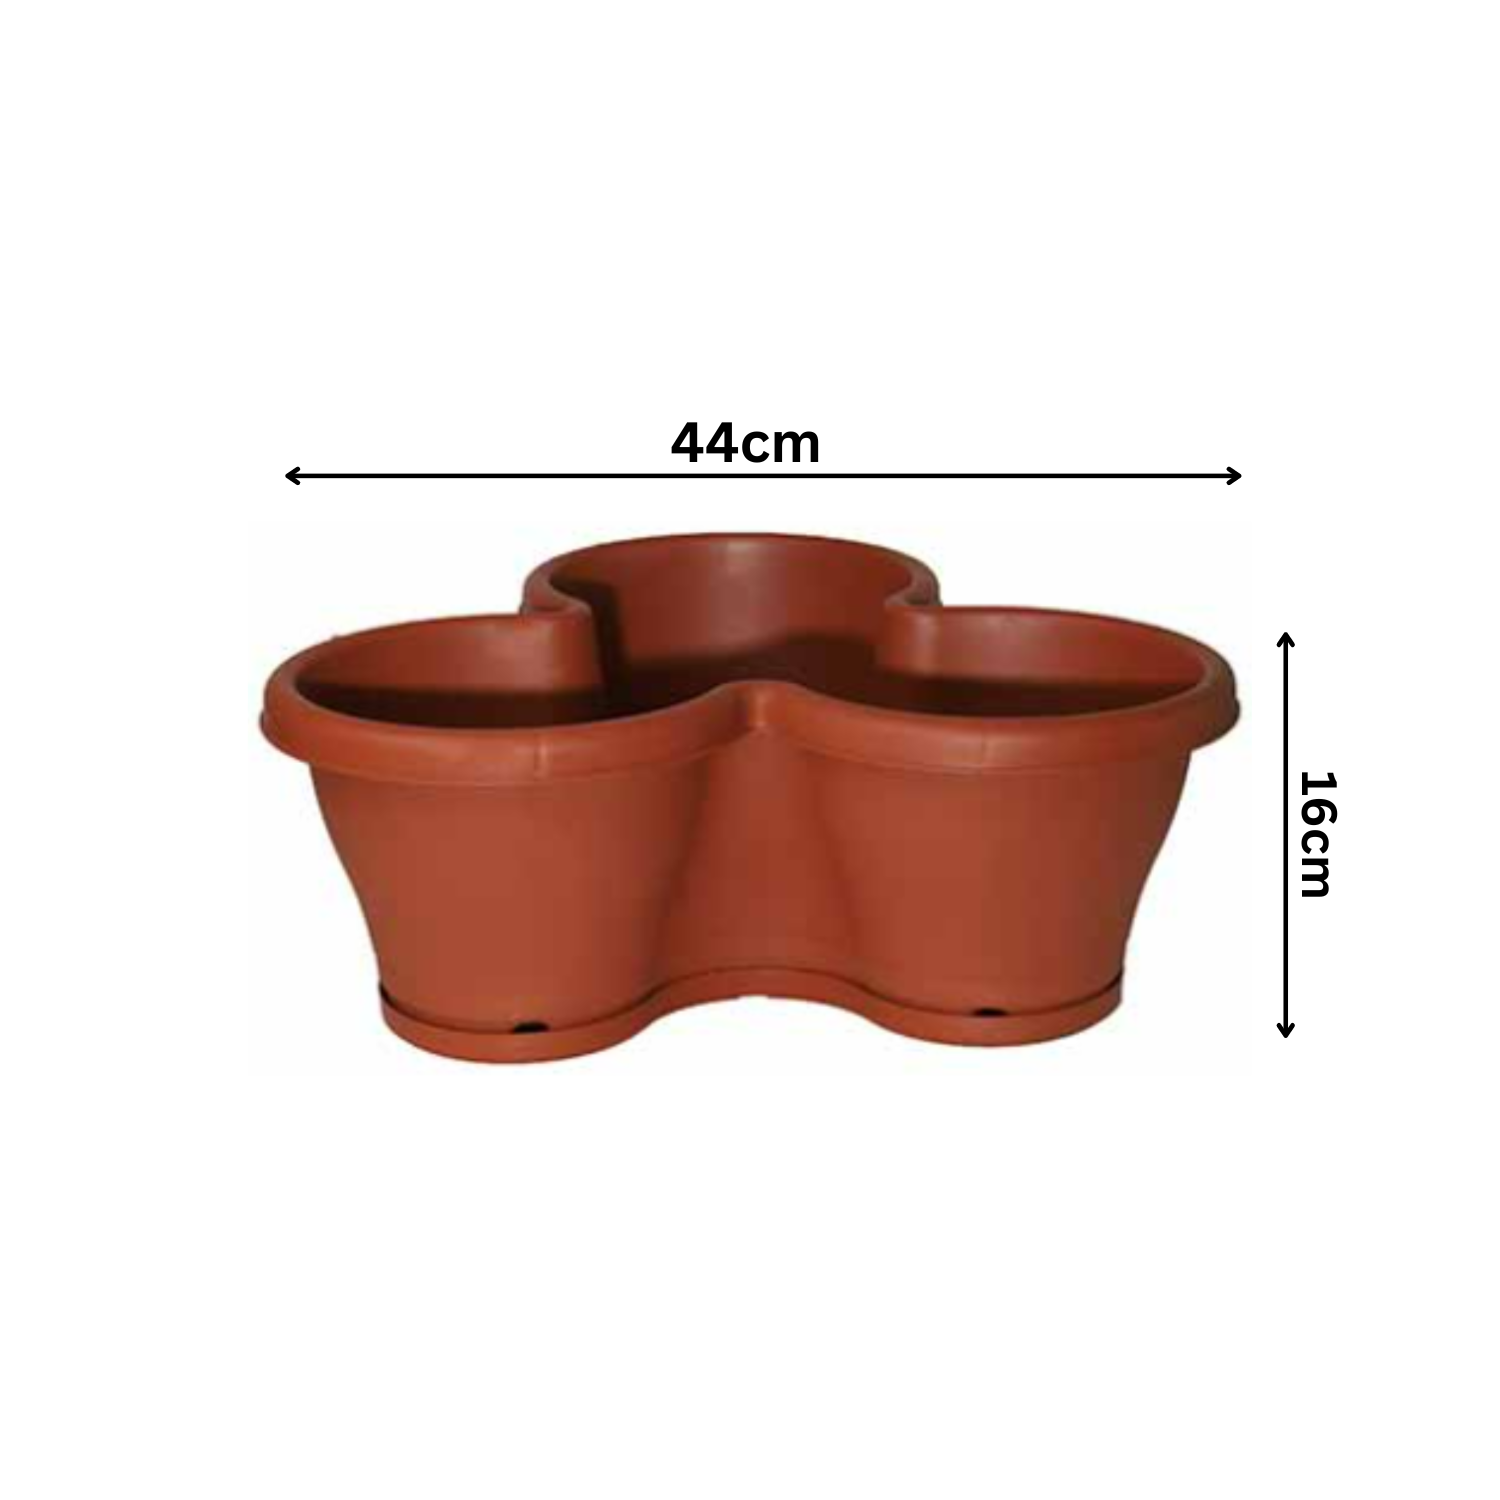 Flower Tower 44cm Round Plastic Pot for Home & Garden